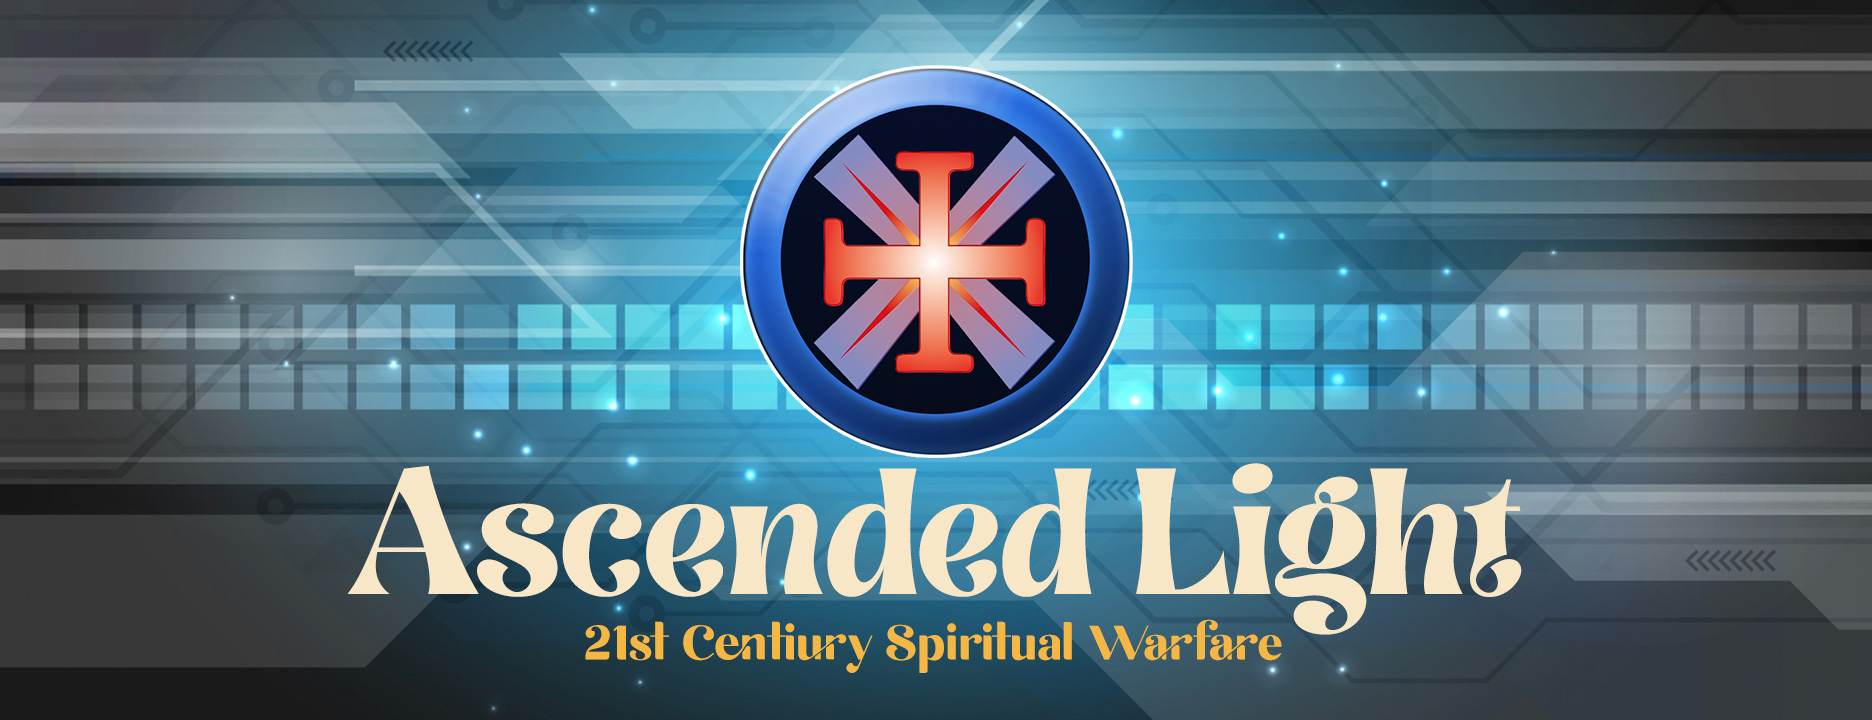 Ascended Light — 21st Century Spiritual Warfare